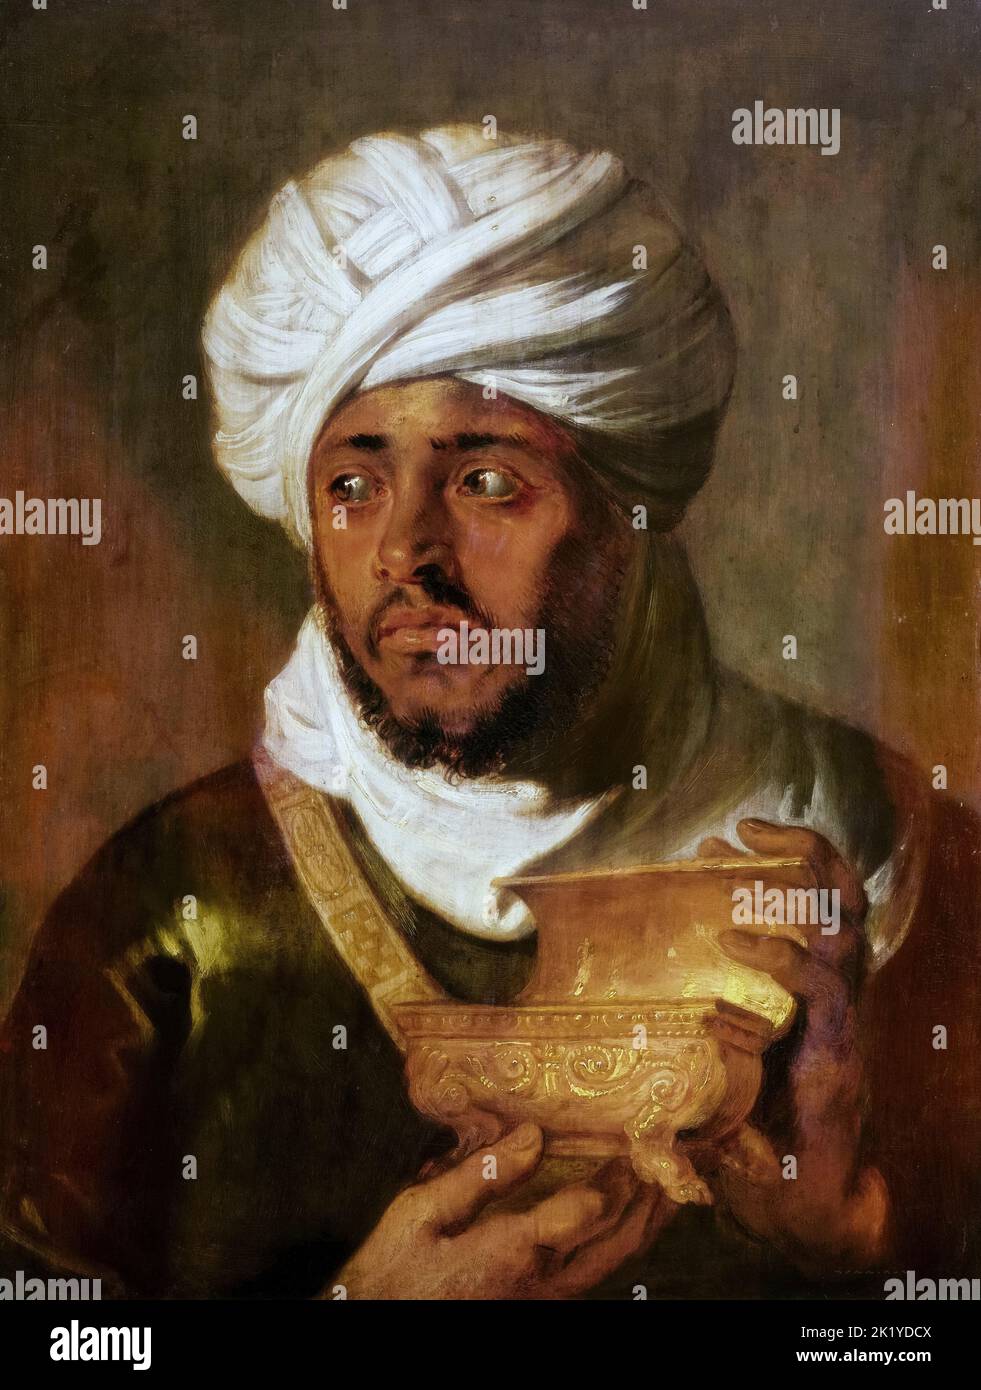 The Moorish King, ('Balthazar'), The Ethiopian King, portrait painting in oil on oak wood by Peter Paul Rubens, 1630-1633 Stock Photo